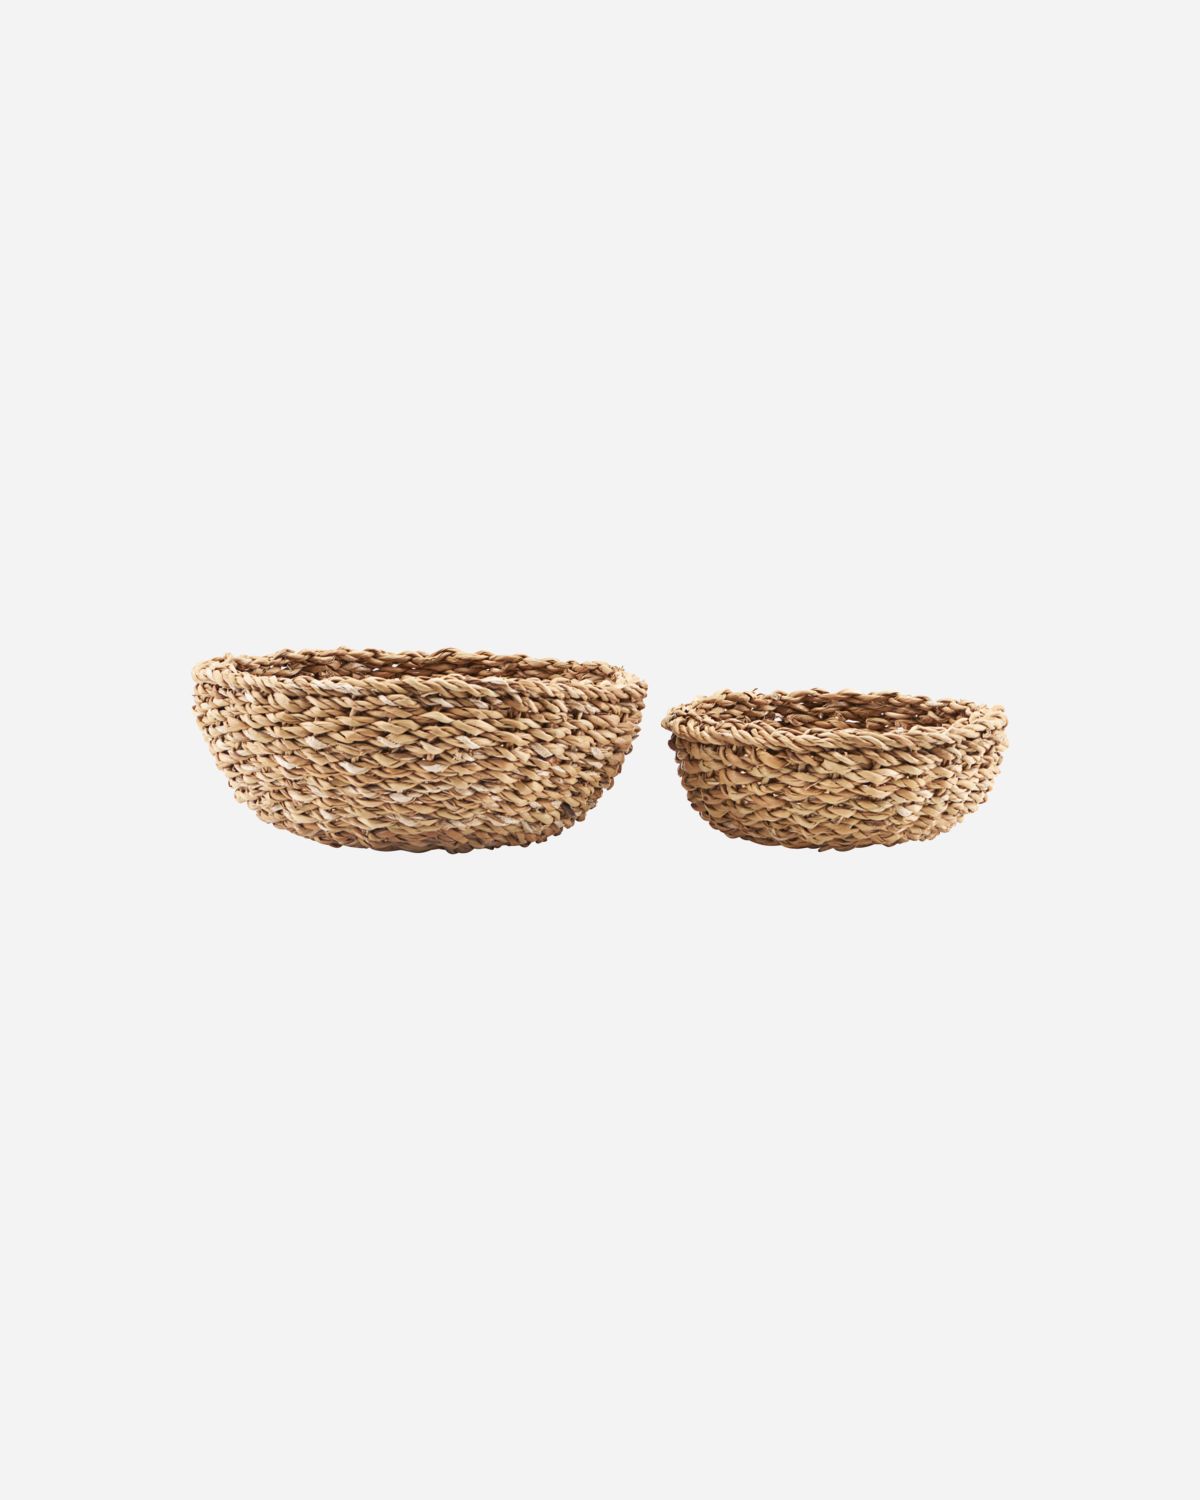 Bread Baskets - 2 Sizes